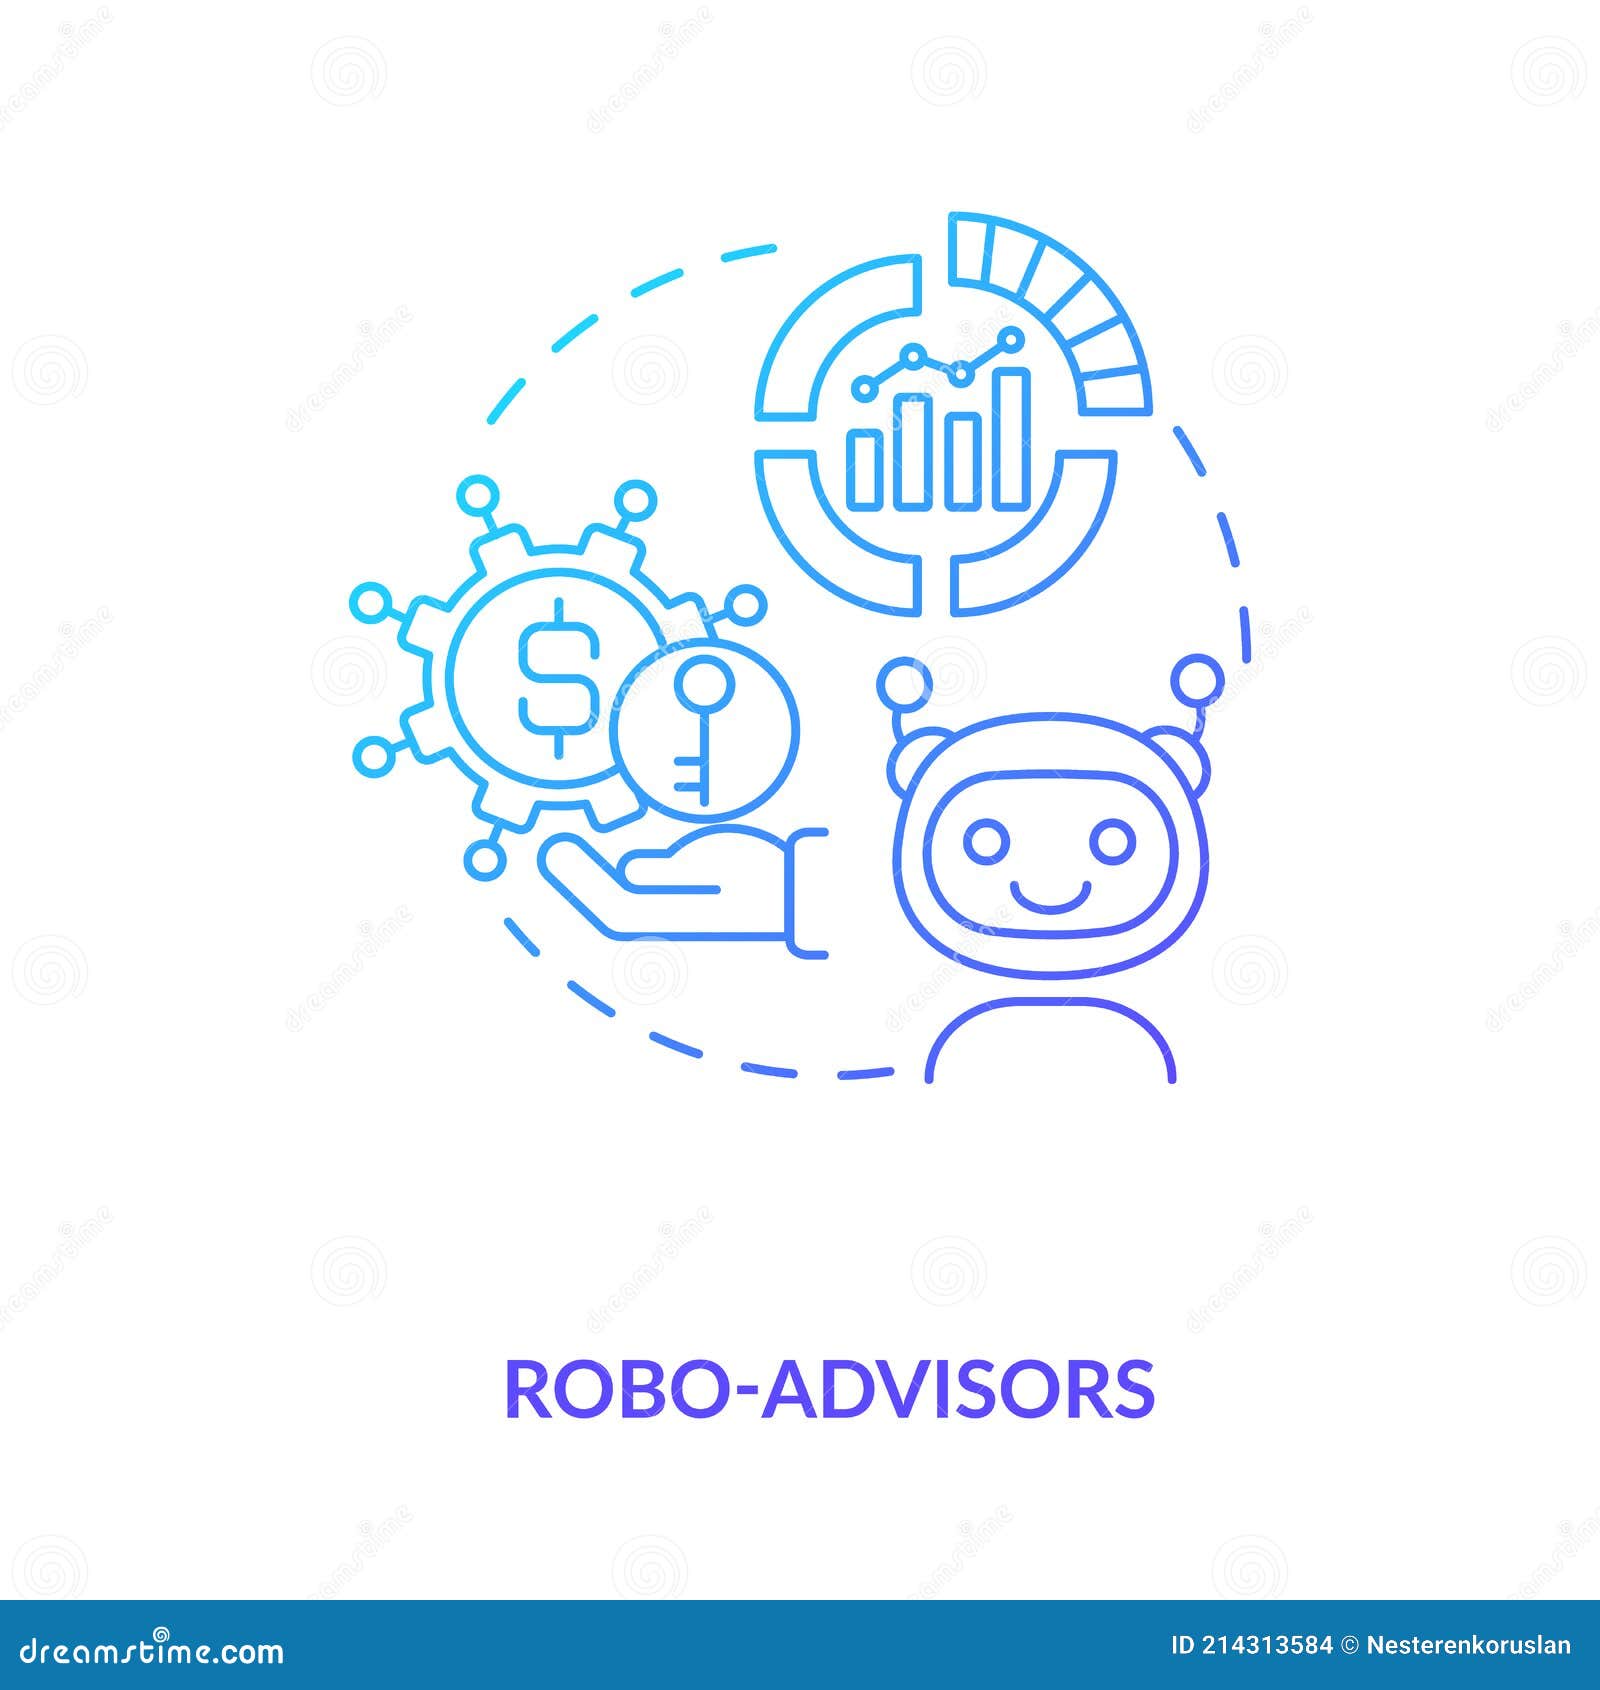 robo-advisors concept icon